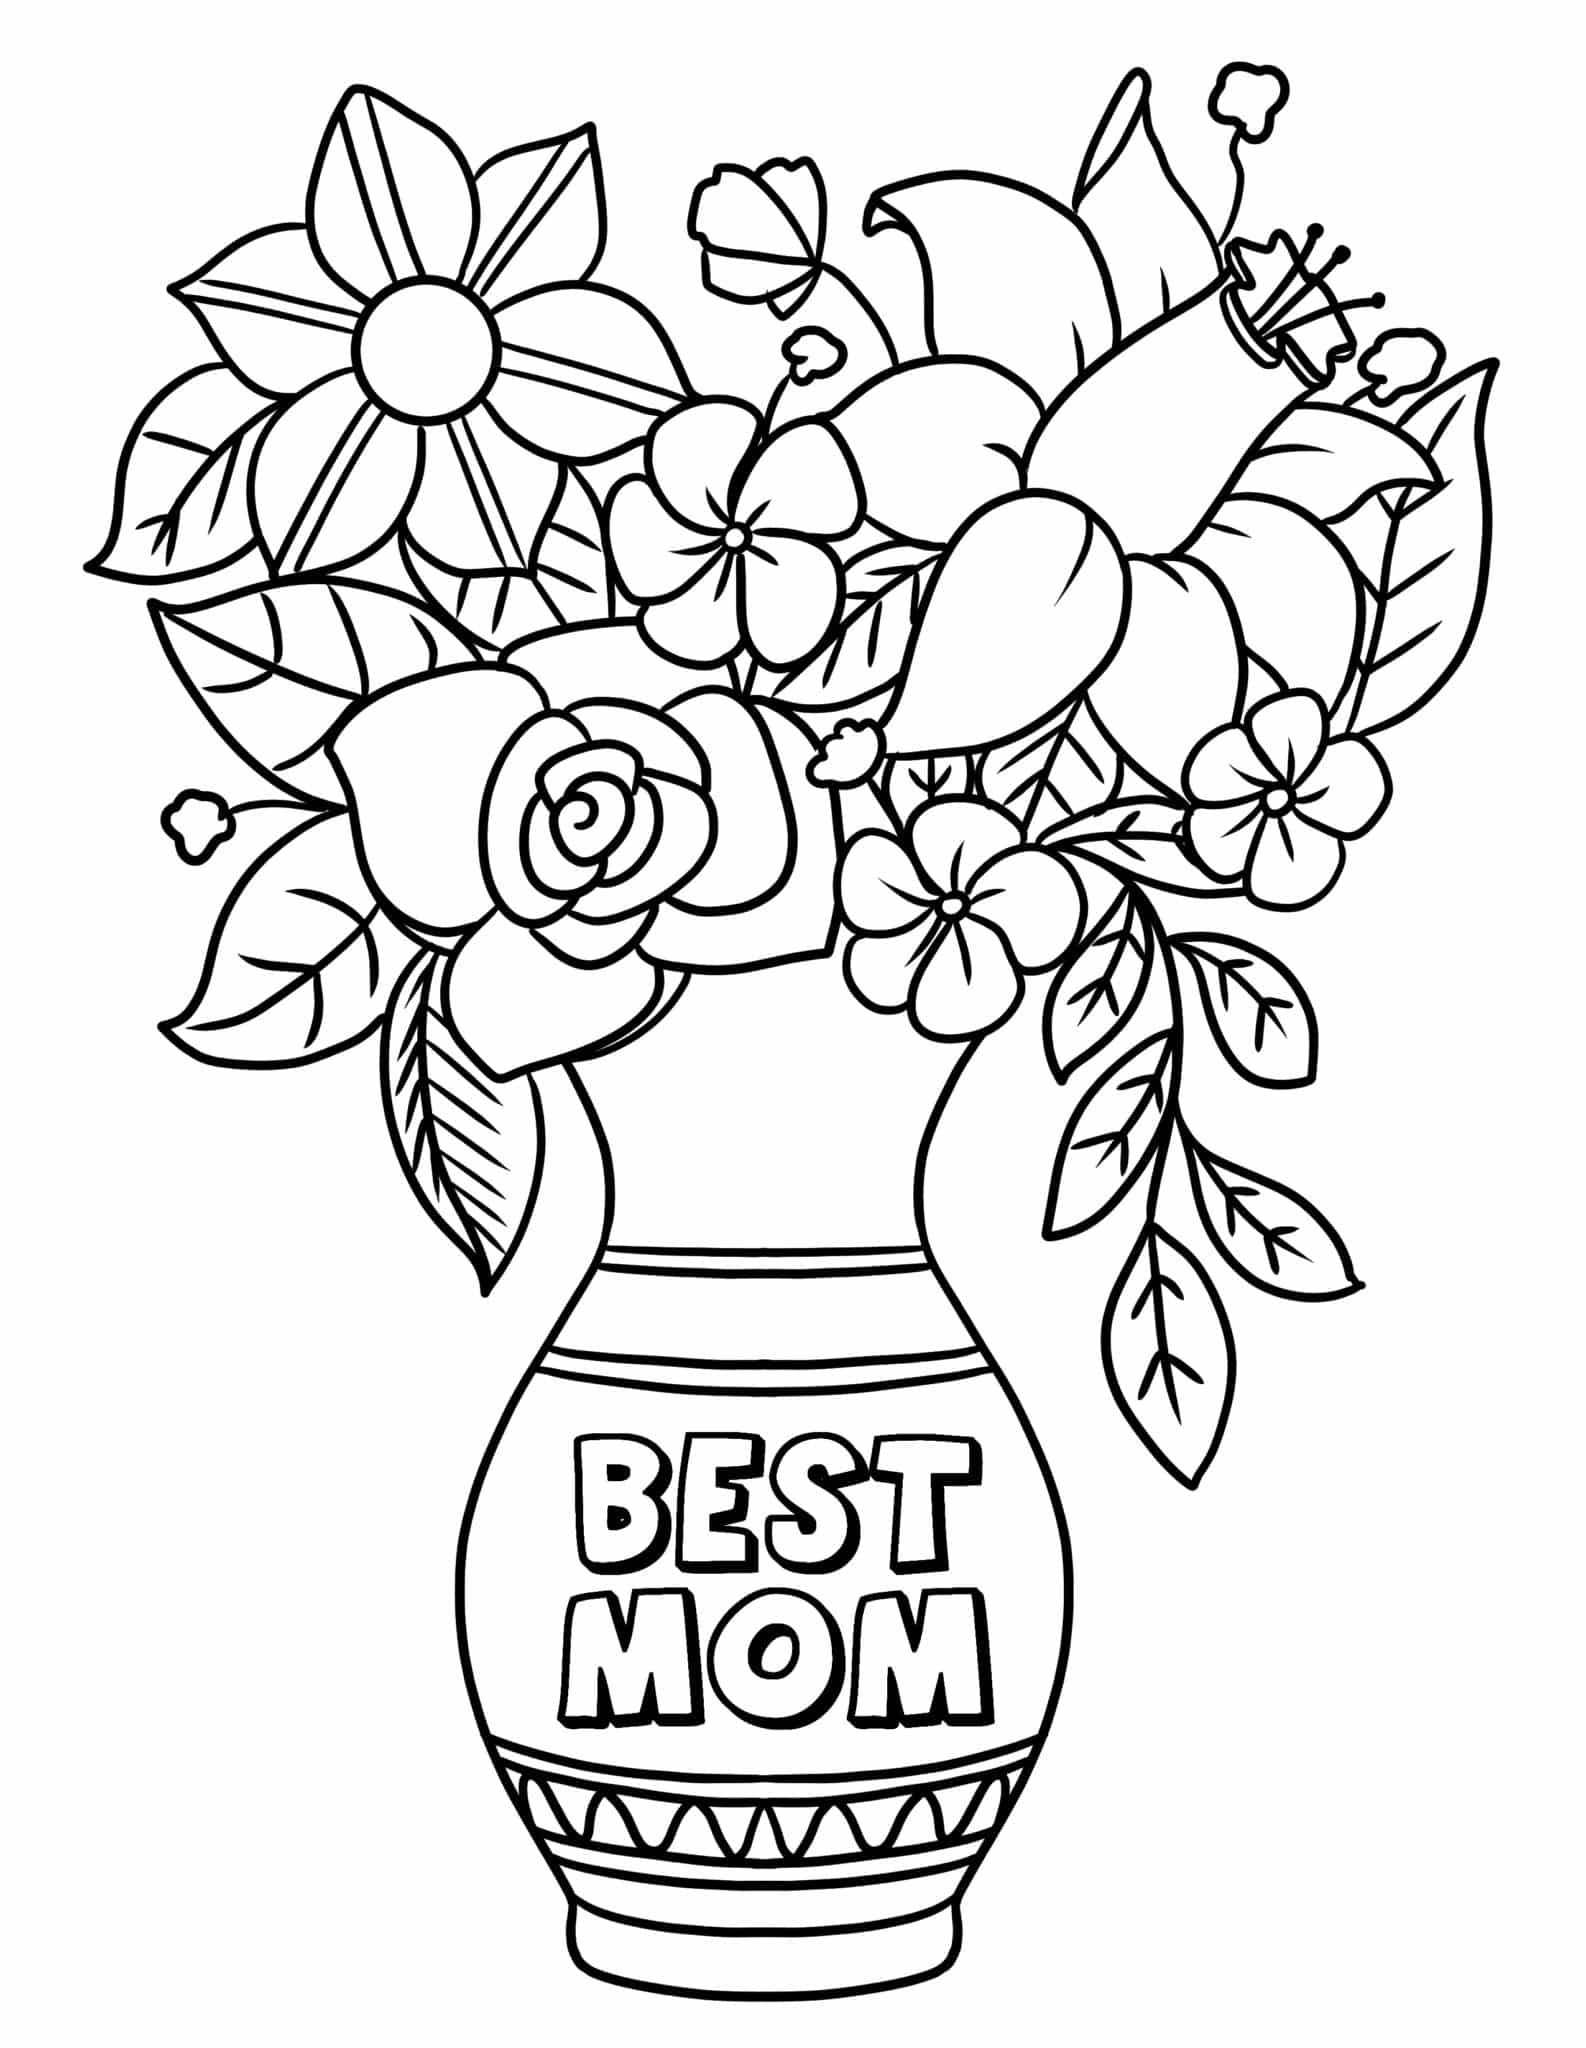 Lindo Vaso de Flores no dia das Mães para colorir